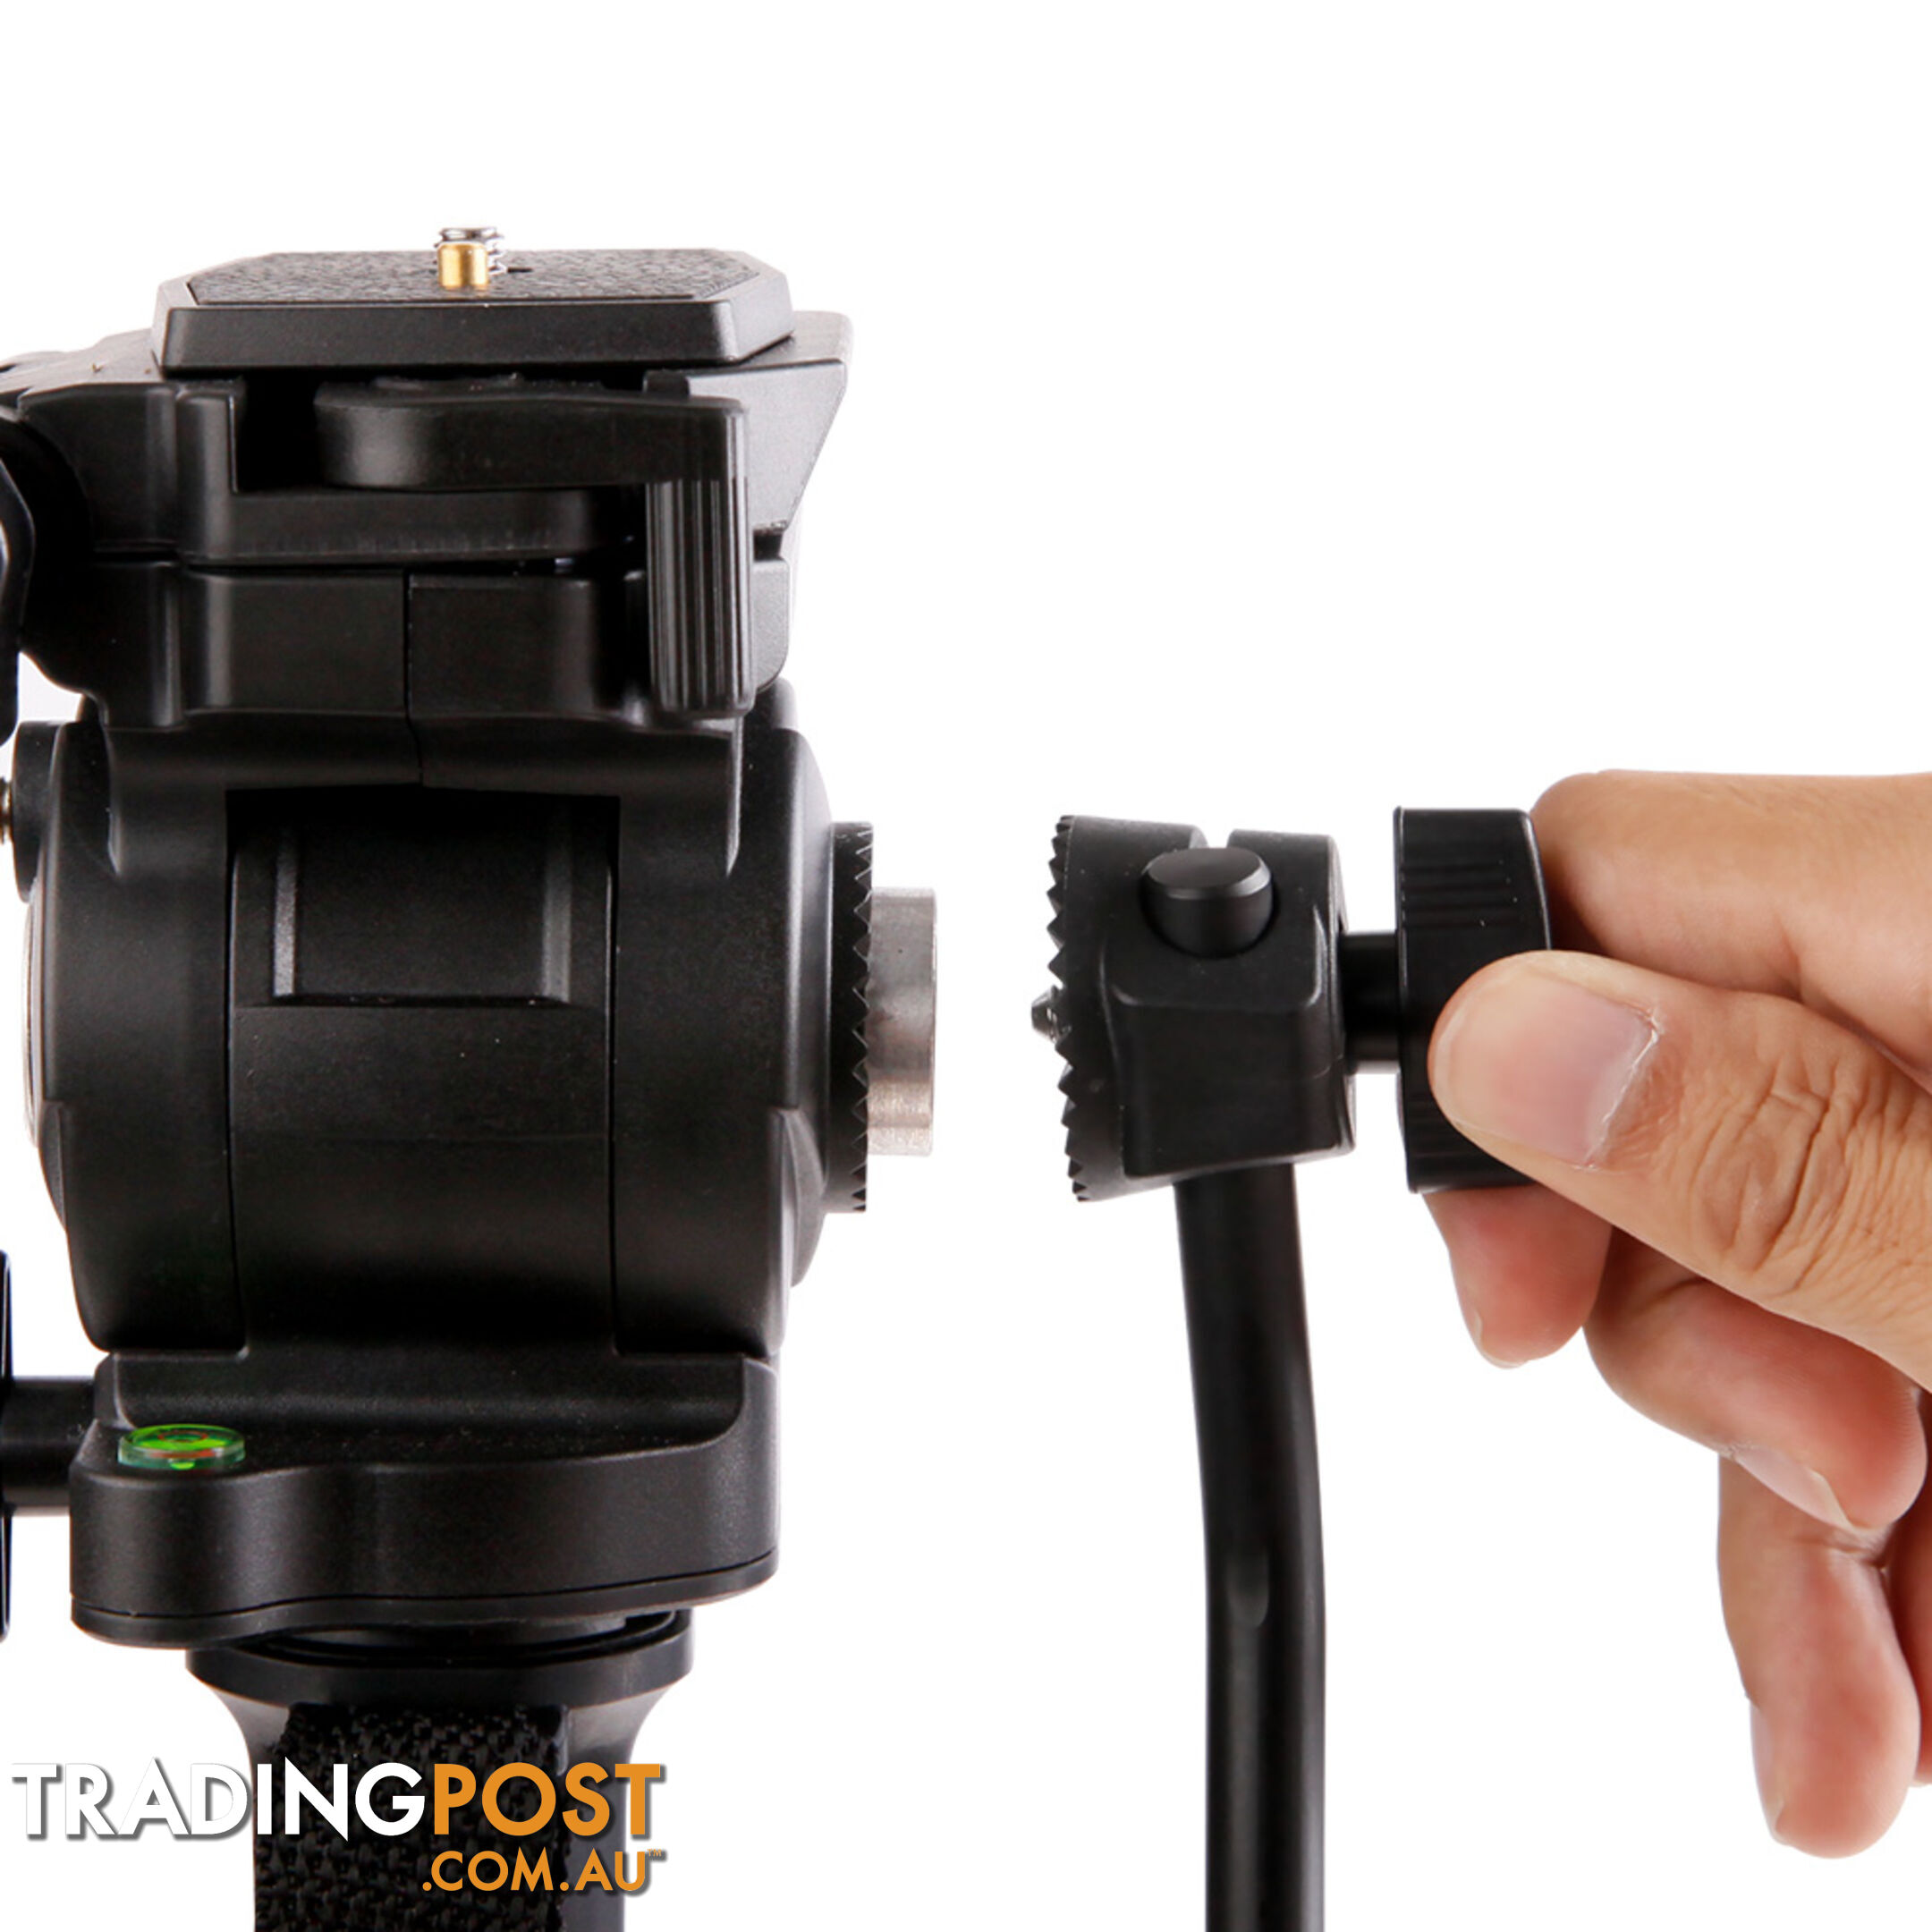 DSLR Camera Monopod Unipod Tripod Holder Digital Camera Vedio 146CM Black